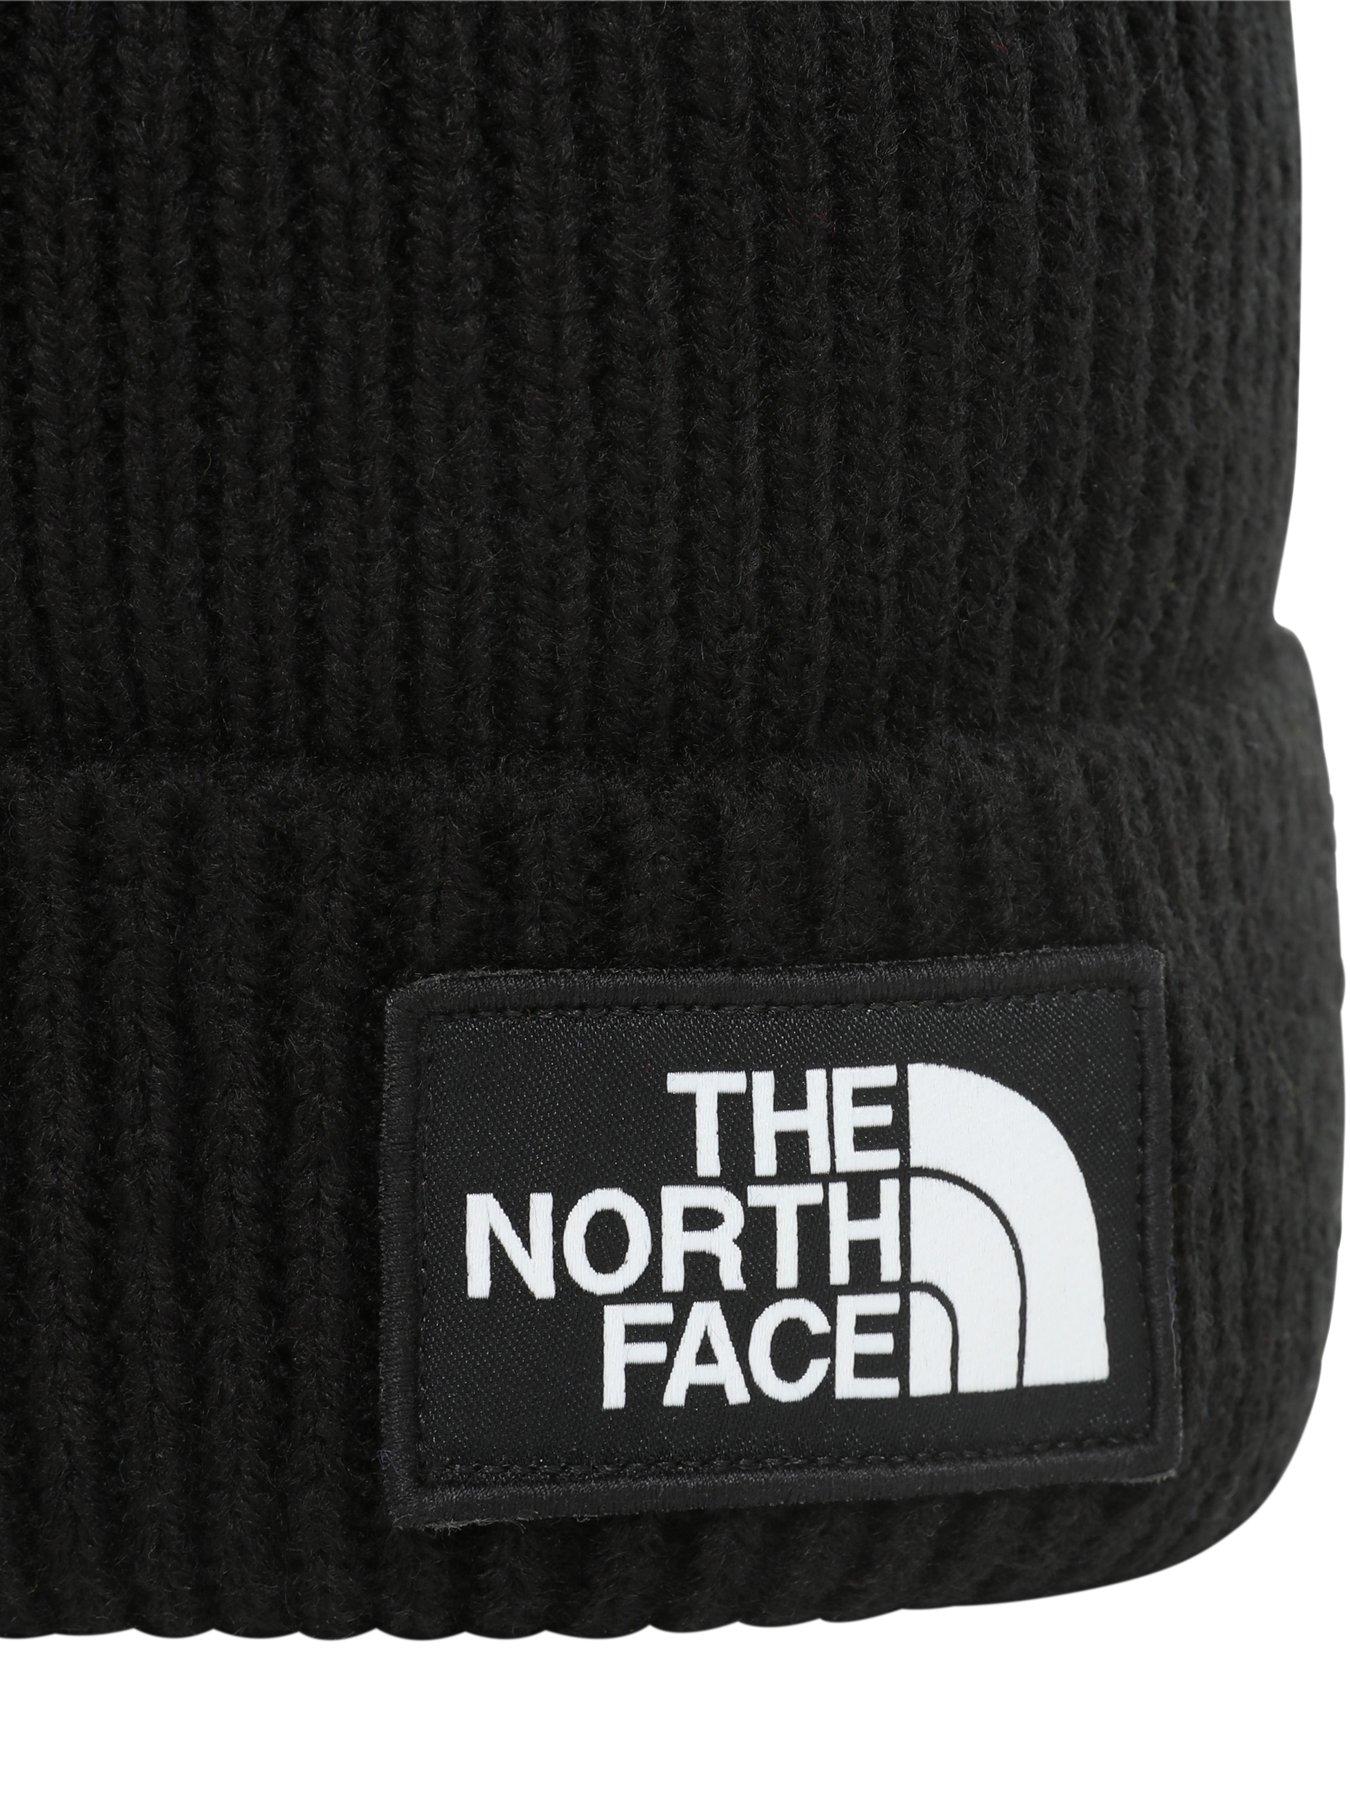 THE NORTH FACE Men's Logo Box Pom Beanie - Black